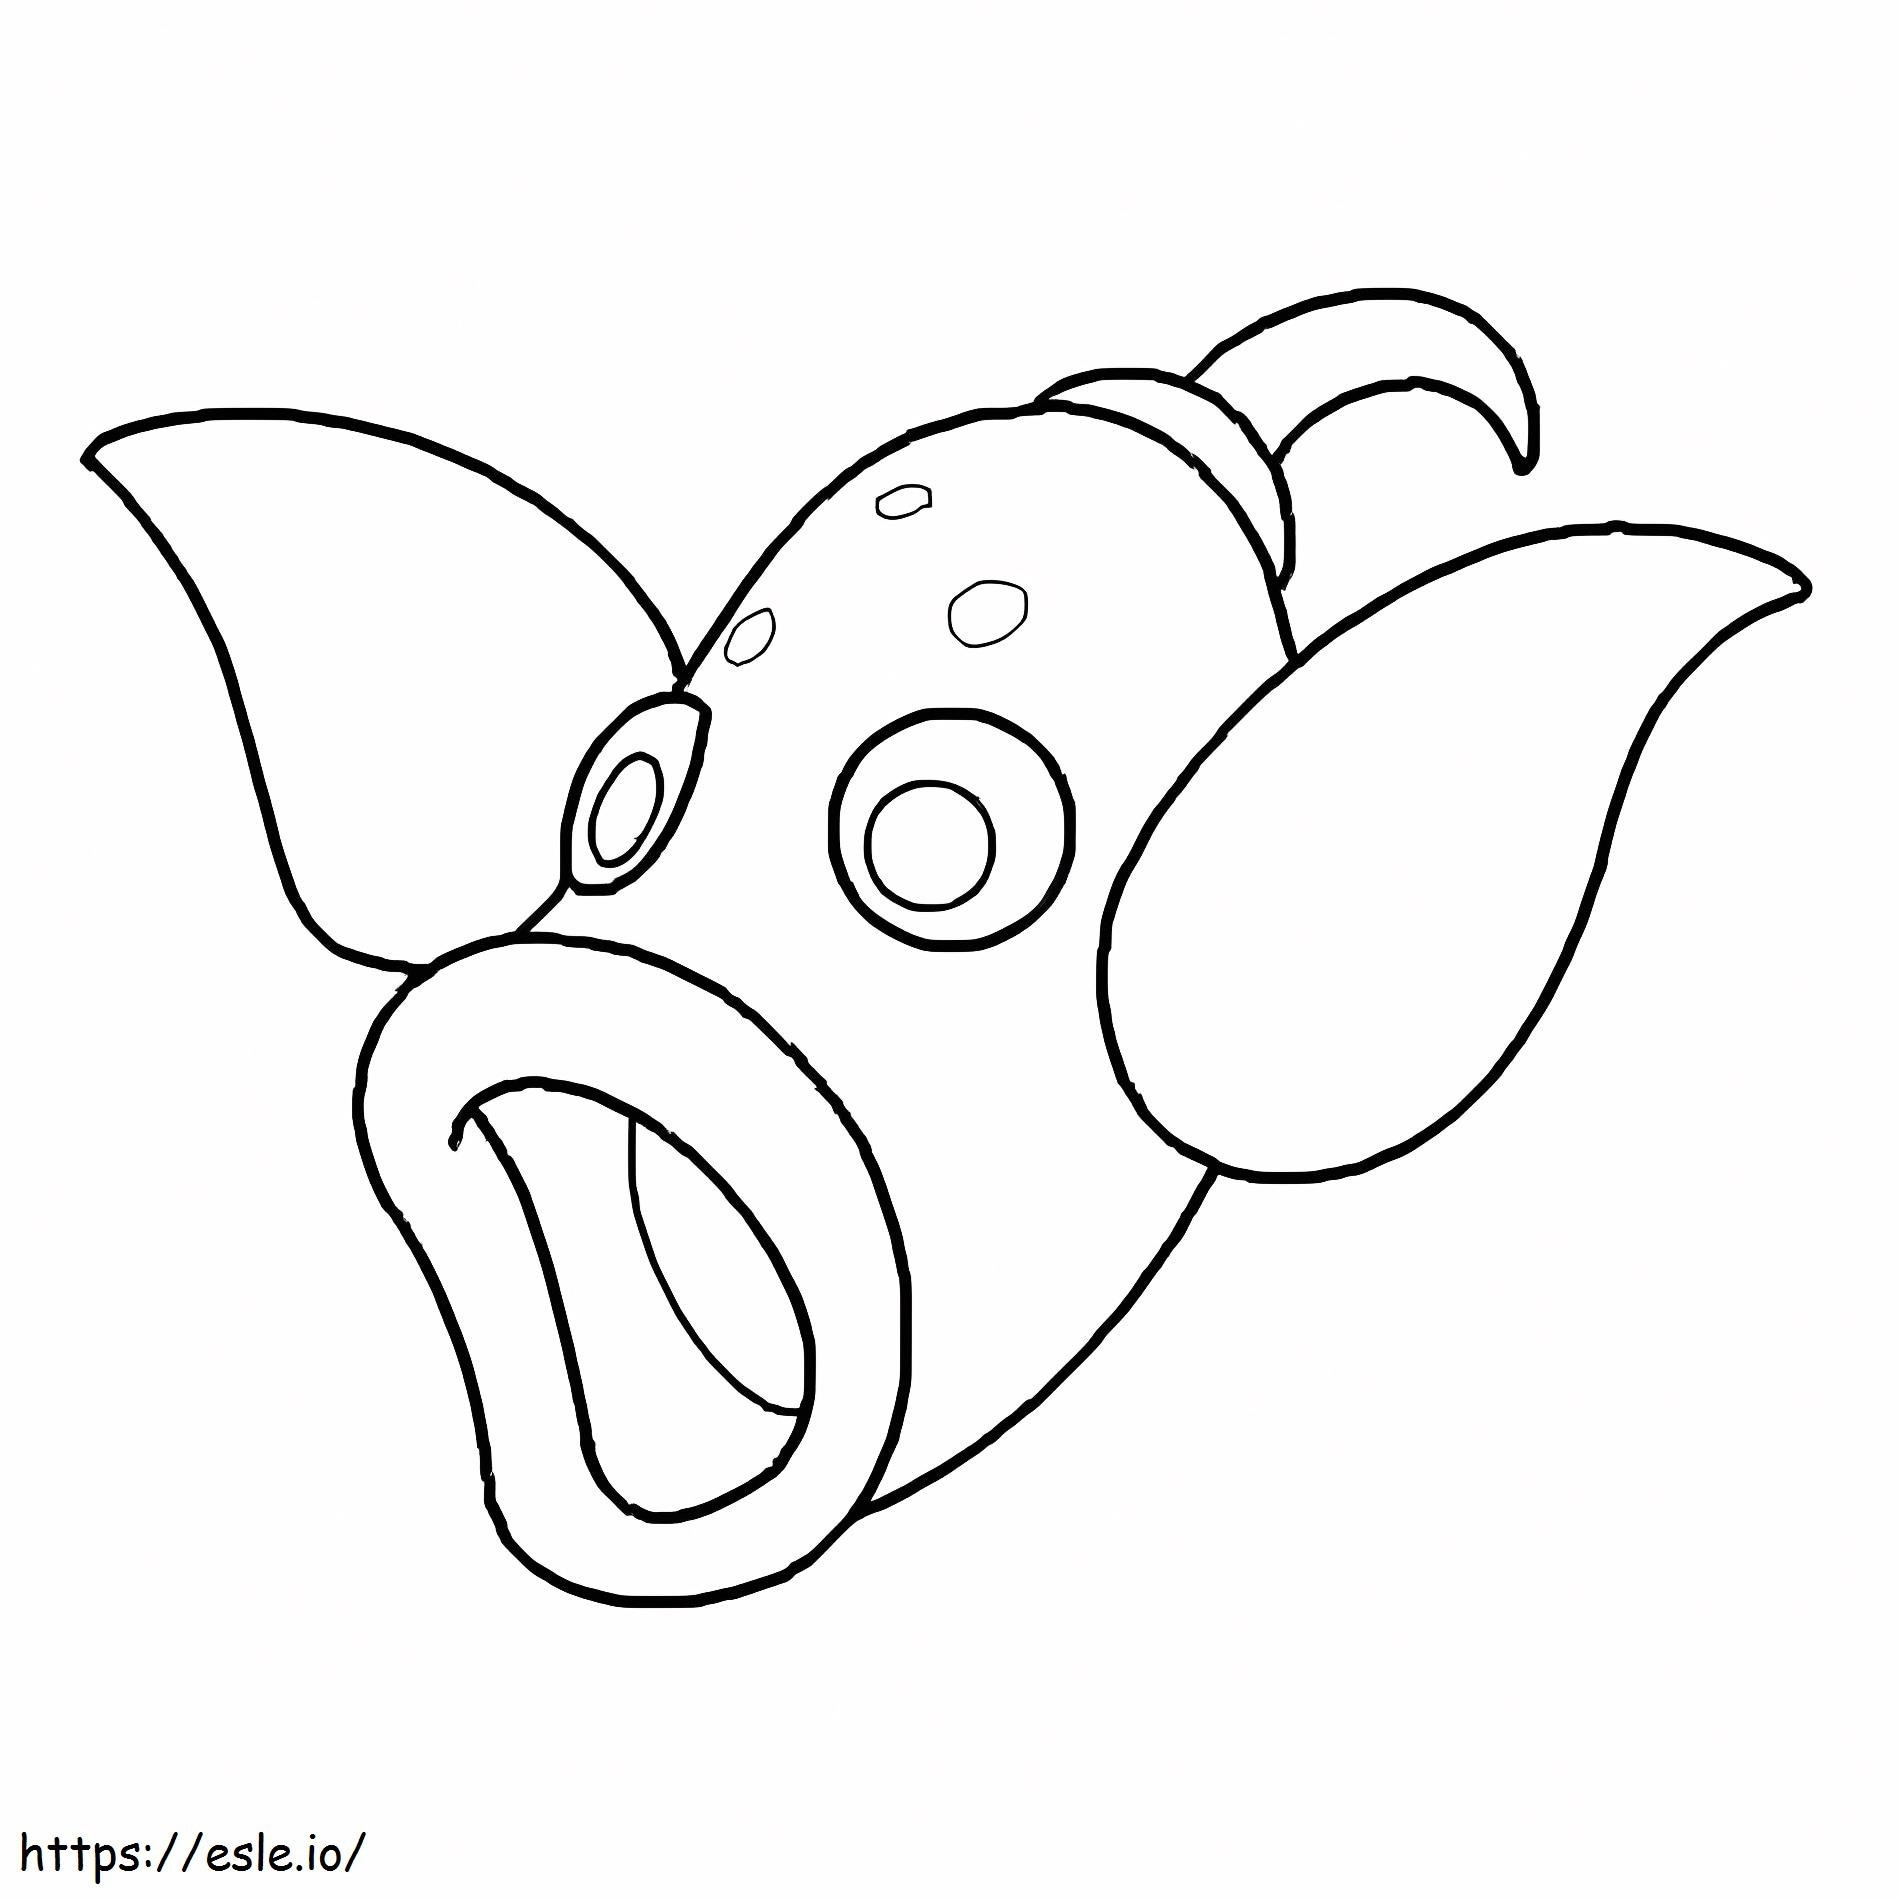 Coloriage Pokemon Gen 1 Clochette à imprimer dessin